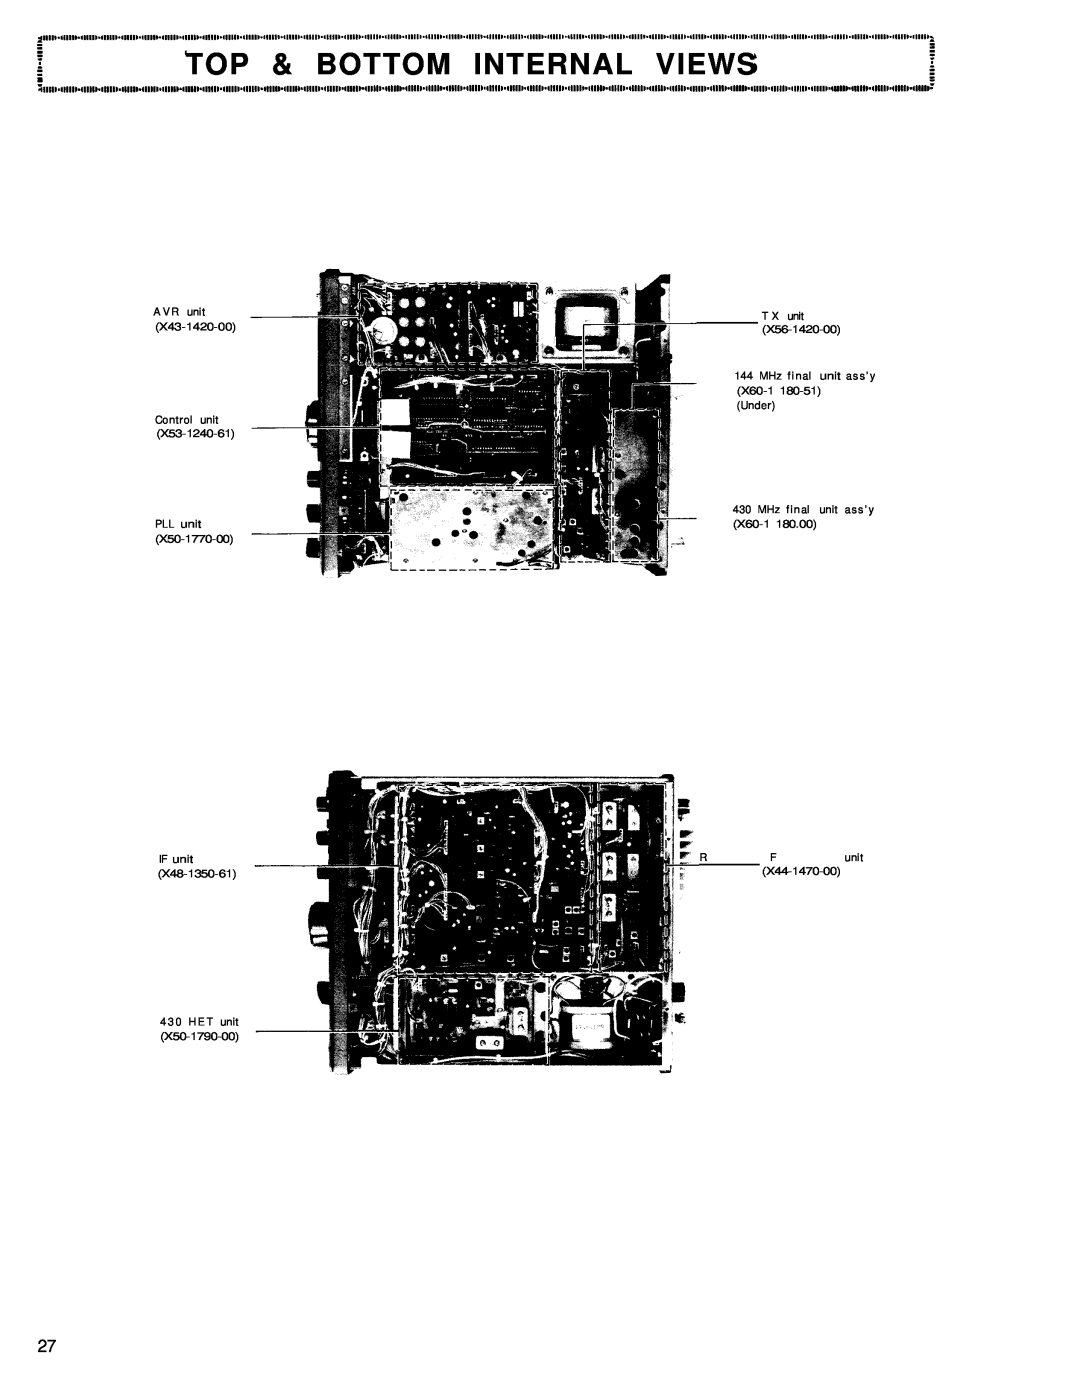 Kenwood TS-780 manual Top & Bottom Internal Views, A V R unit X43-1420-00 Control unit PLL unit, X50-1790-00 